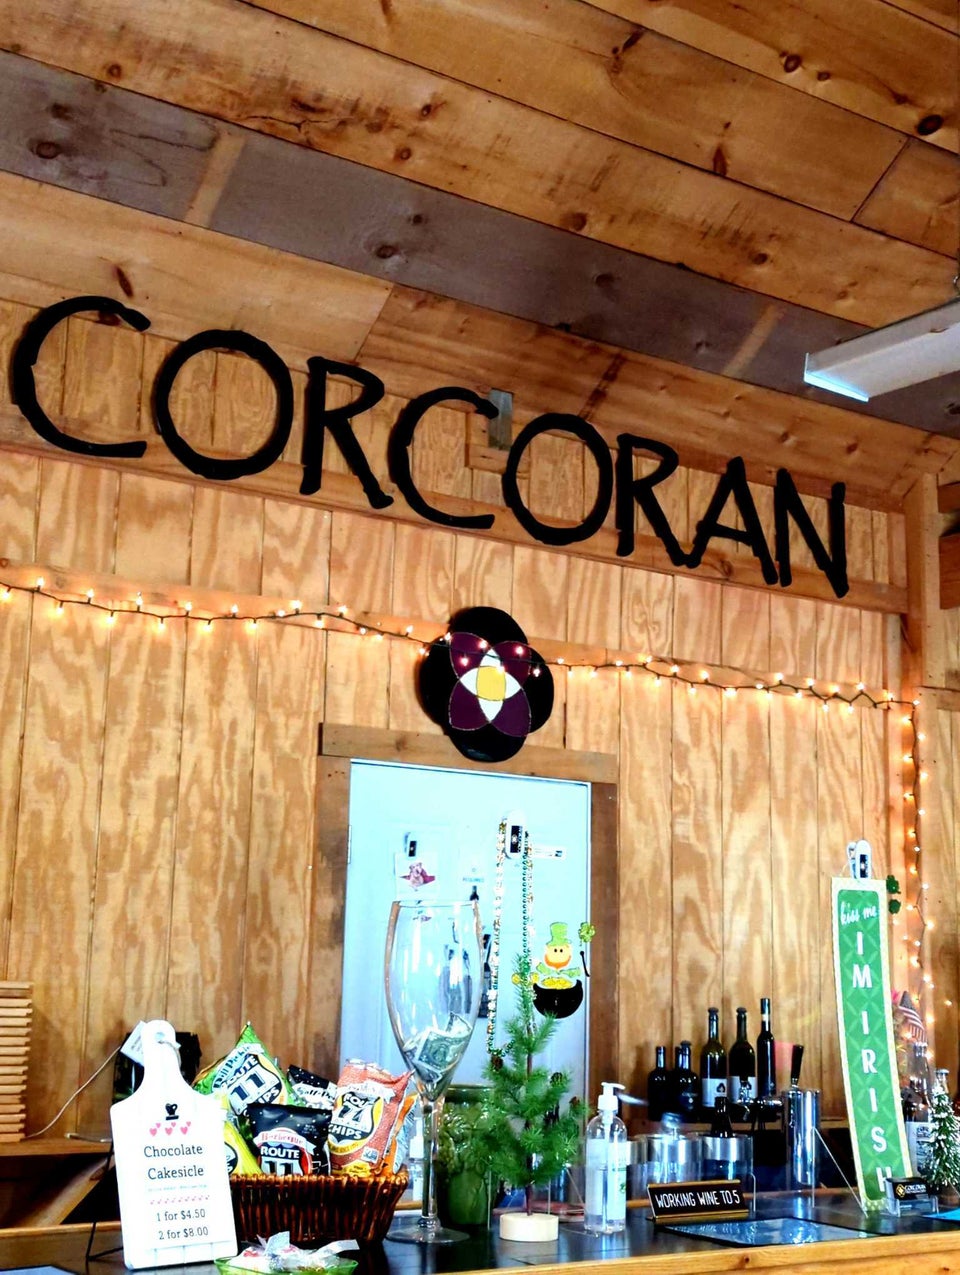 Corcoran Vineyards & Cidery